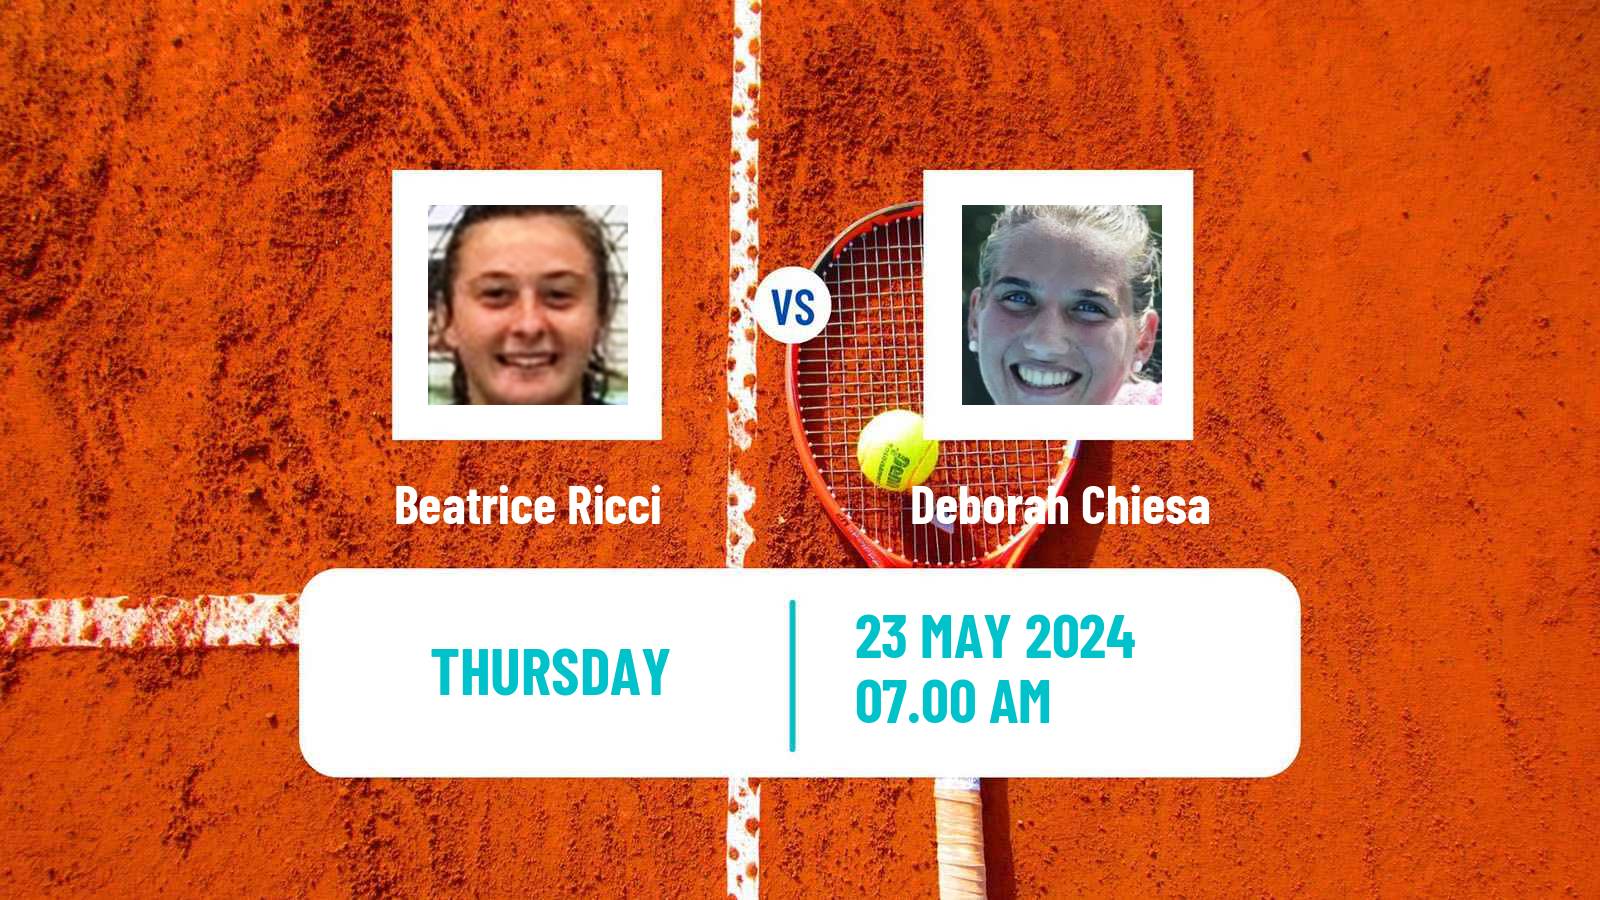 Tennis ITF W75 Grado Women Beatrice Ricci - Deborah Chiesa